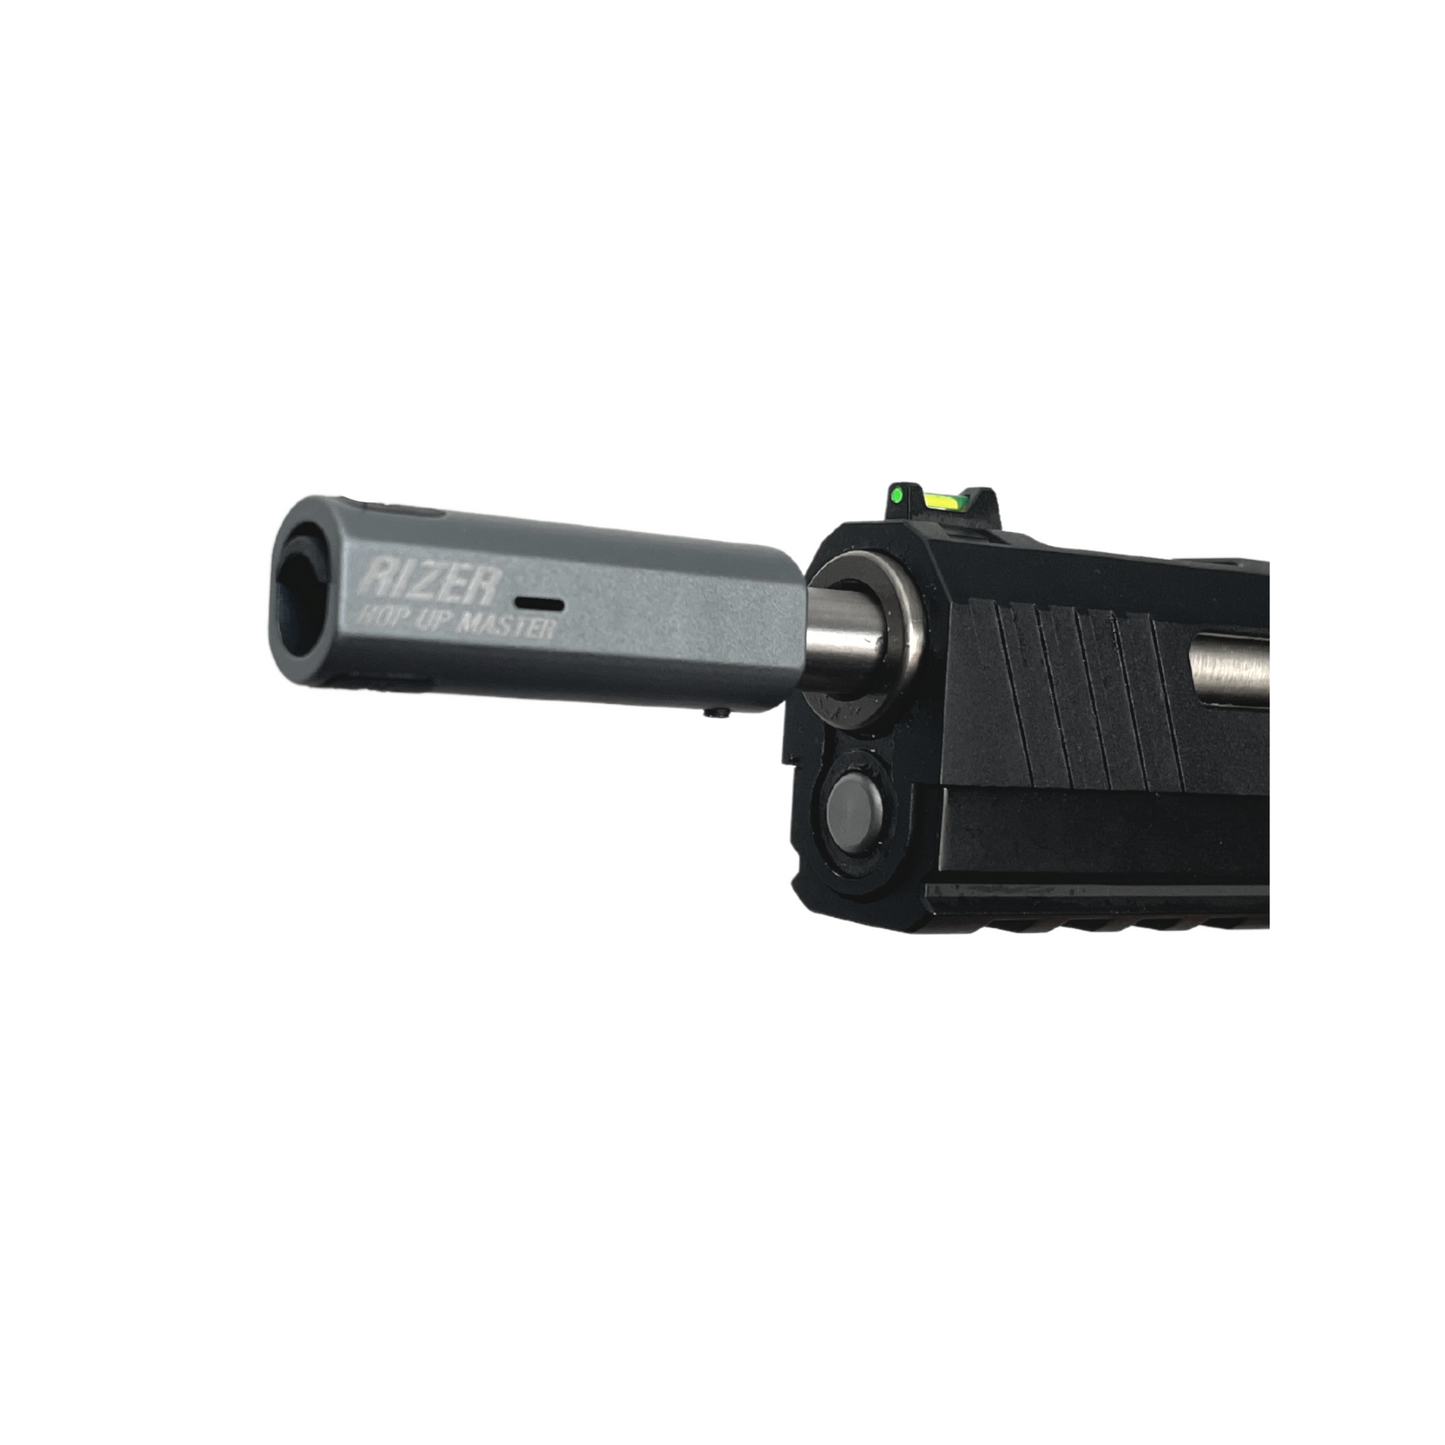 "Comp Clapper" Custom Competition Hi-Capa Gas Pistol HPA Kit- Gel Blaster